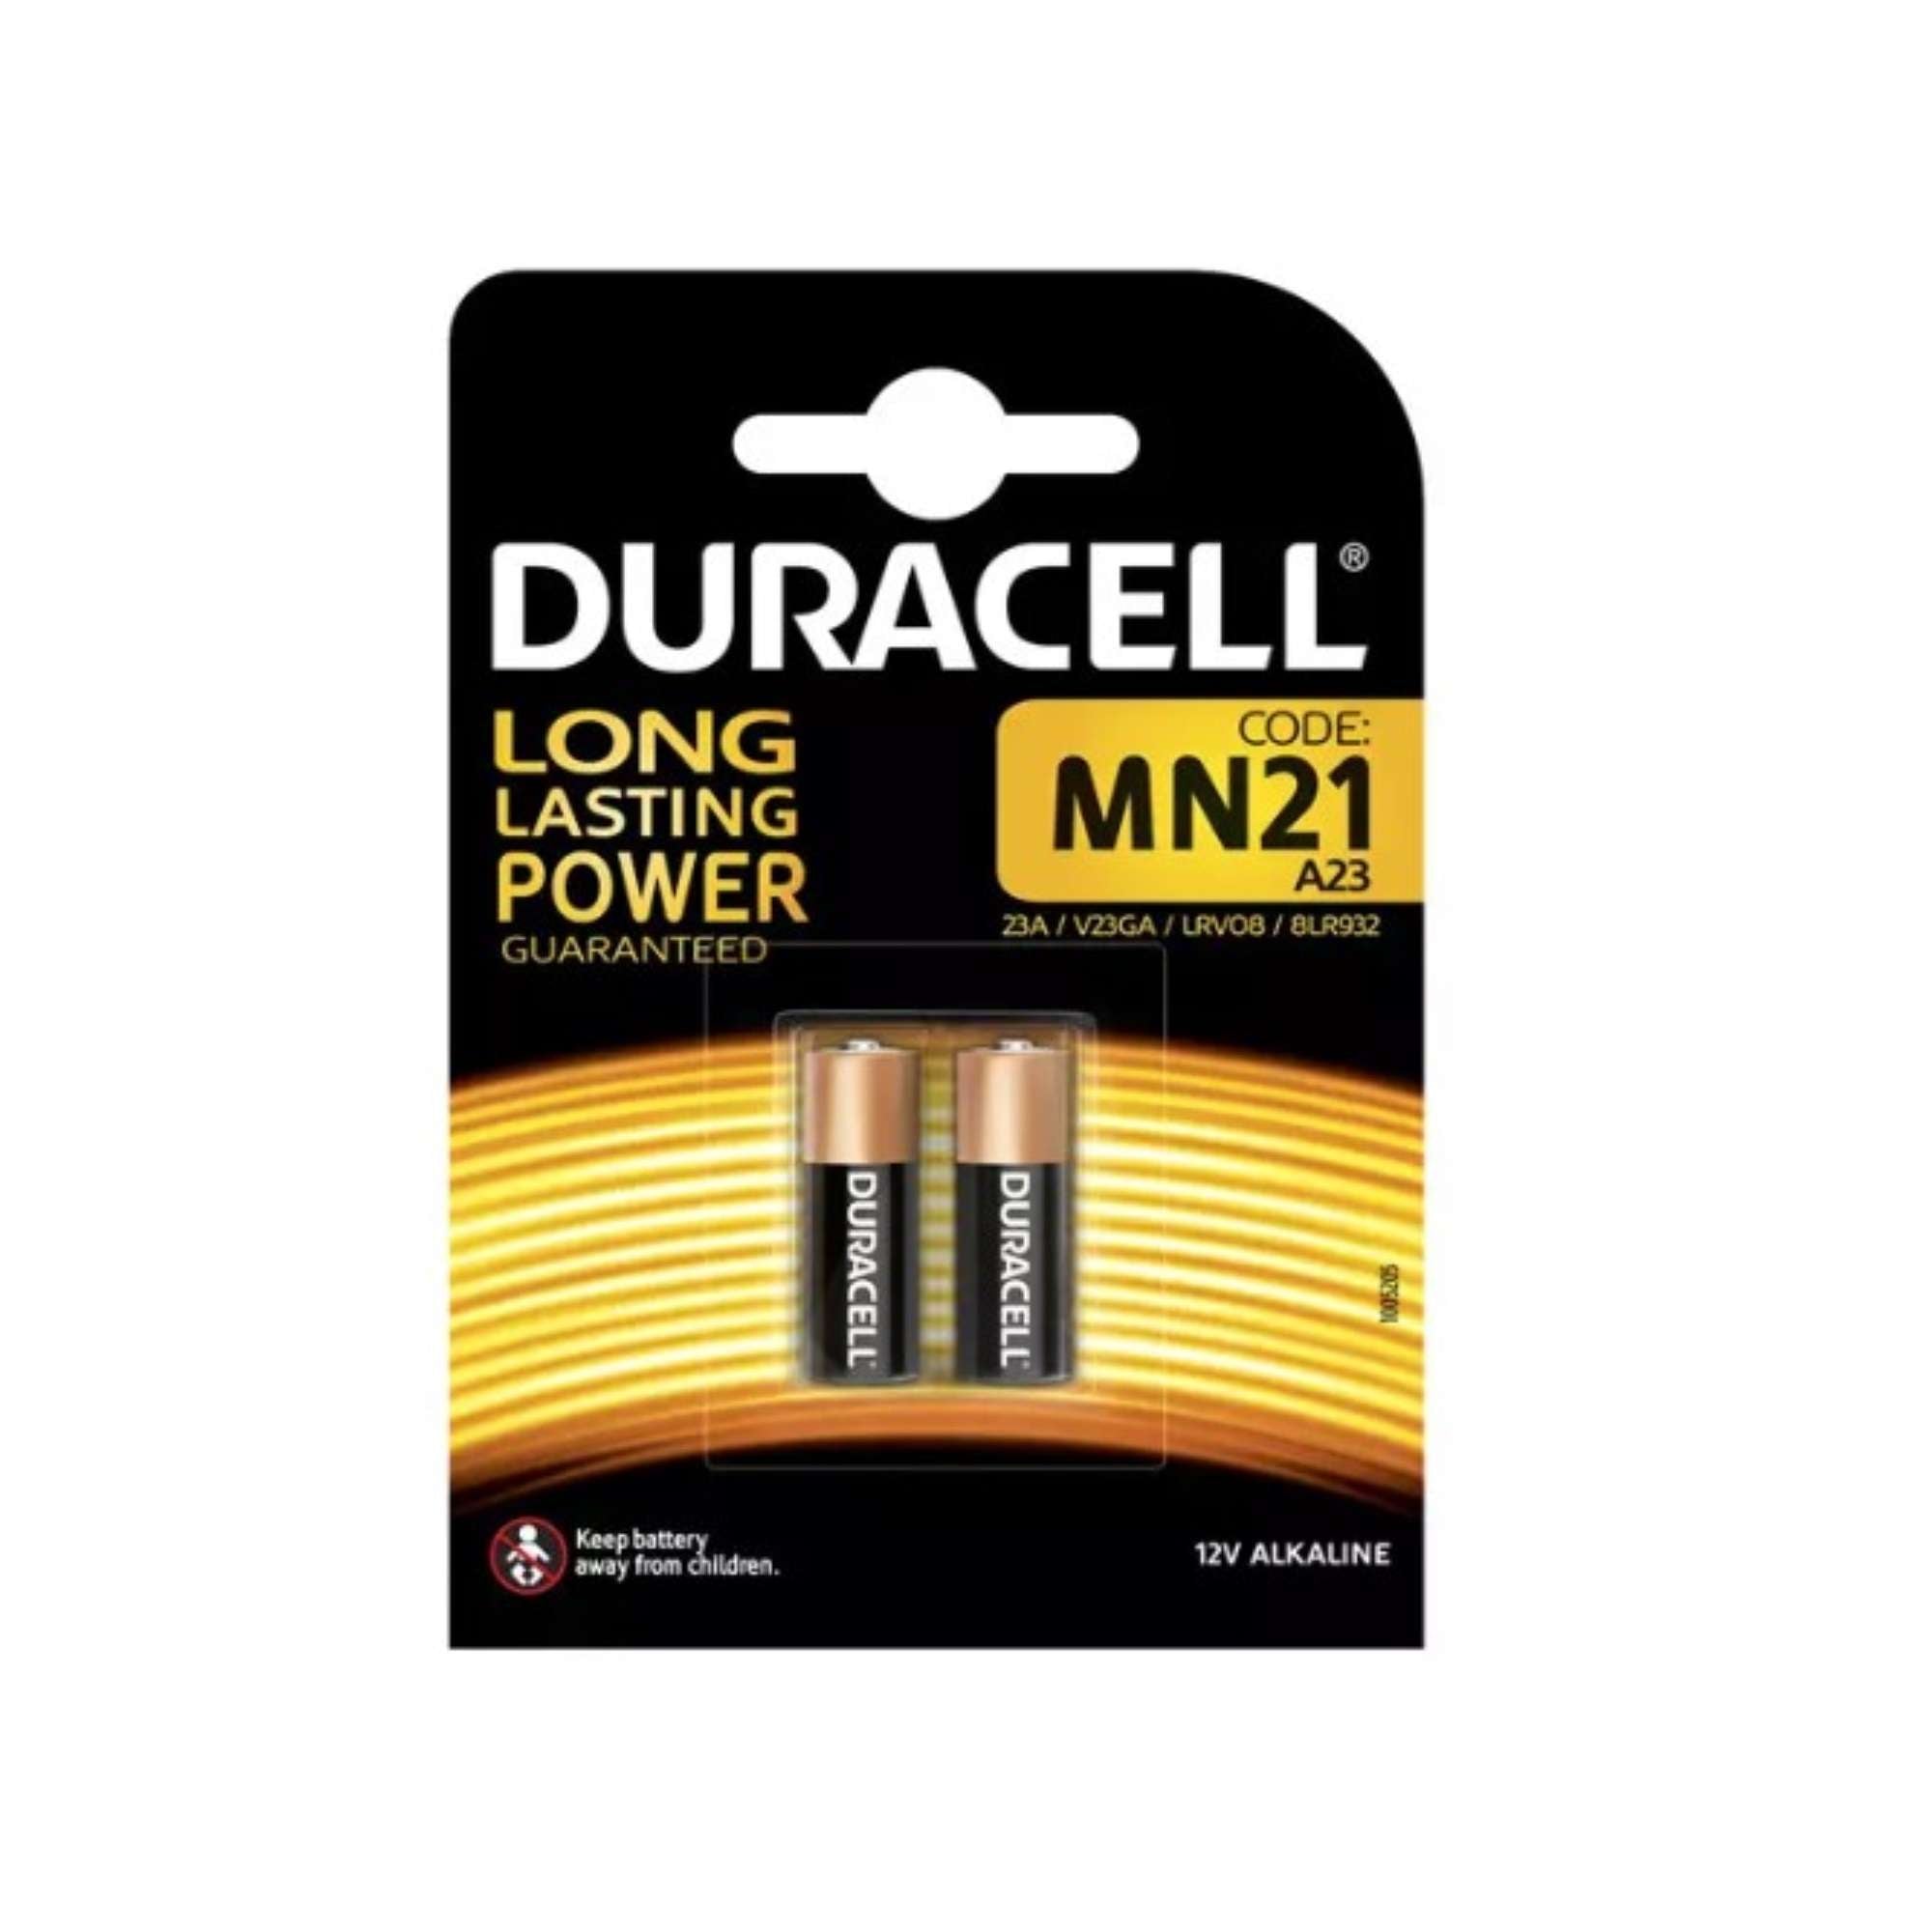 Batterie Alcaline per telecomandi 12V, 2 pile - DURACELL MN21 DU25